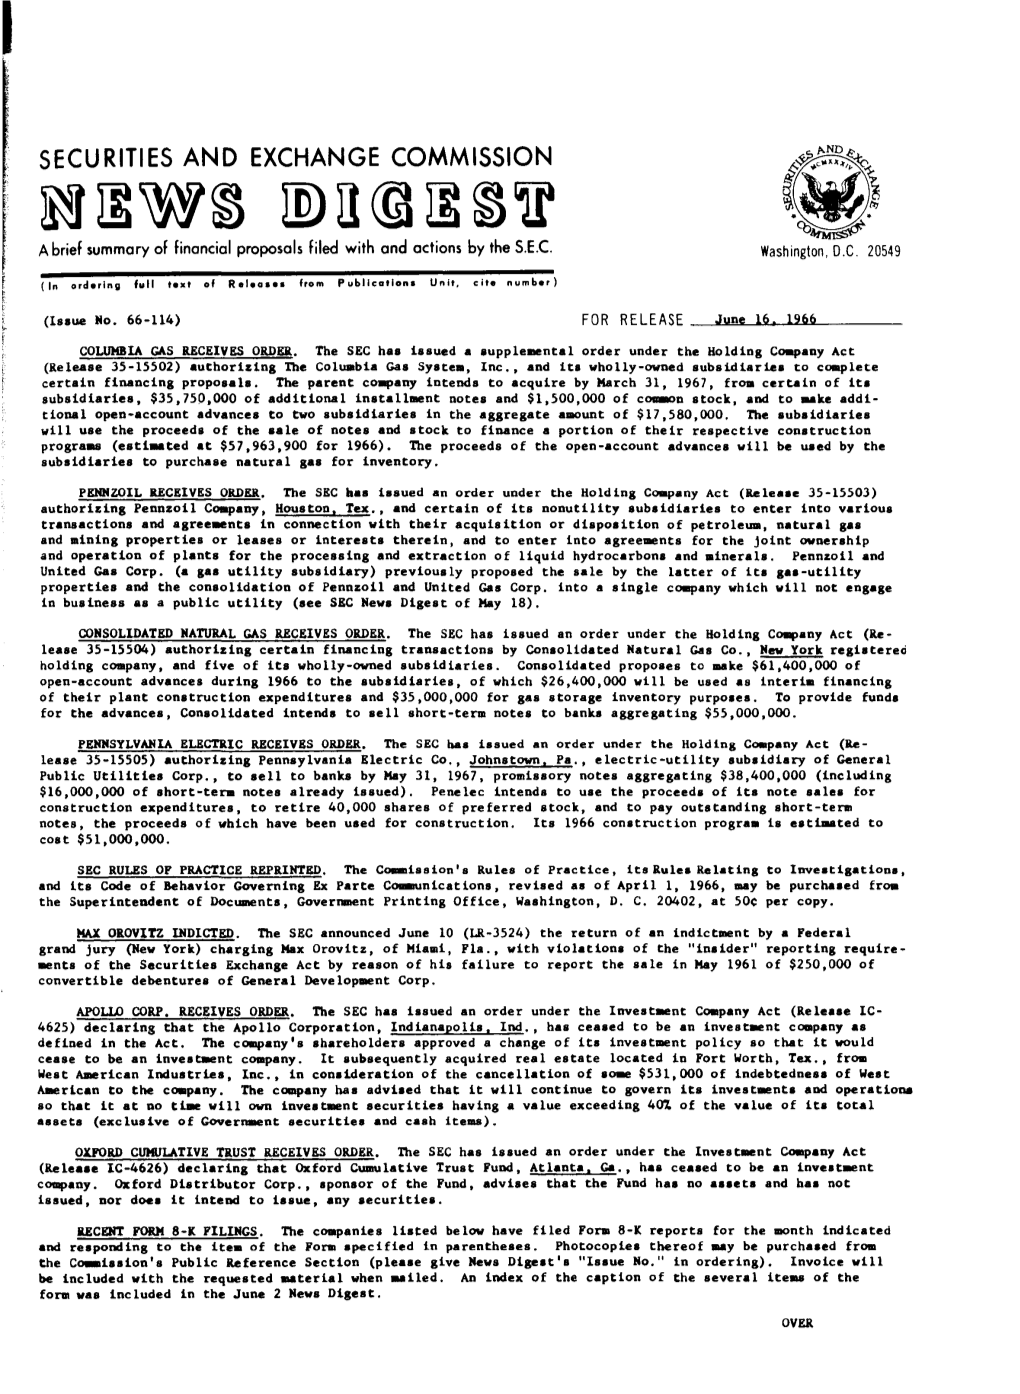 SEC News Digest, 06-16-1966